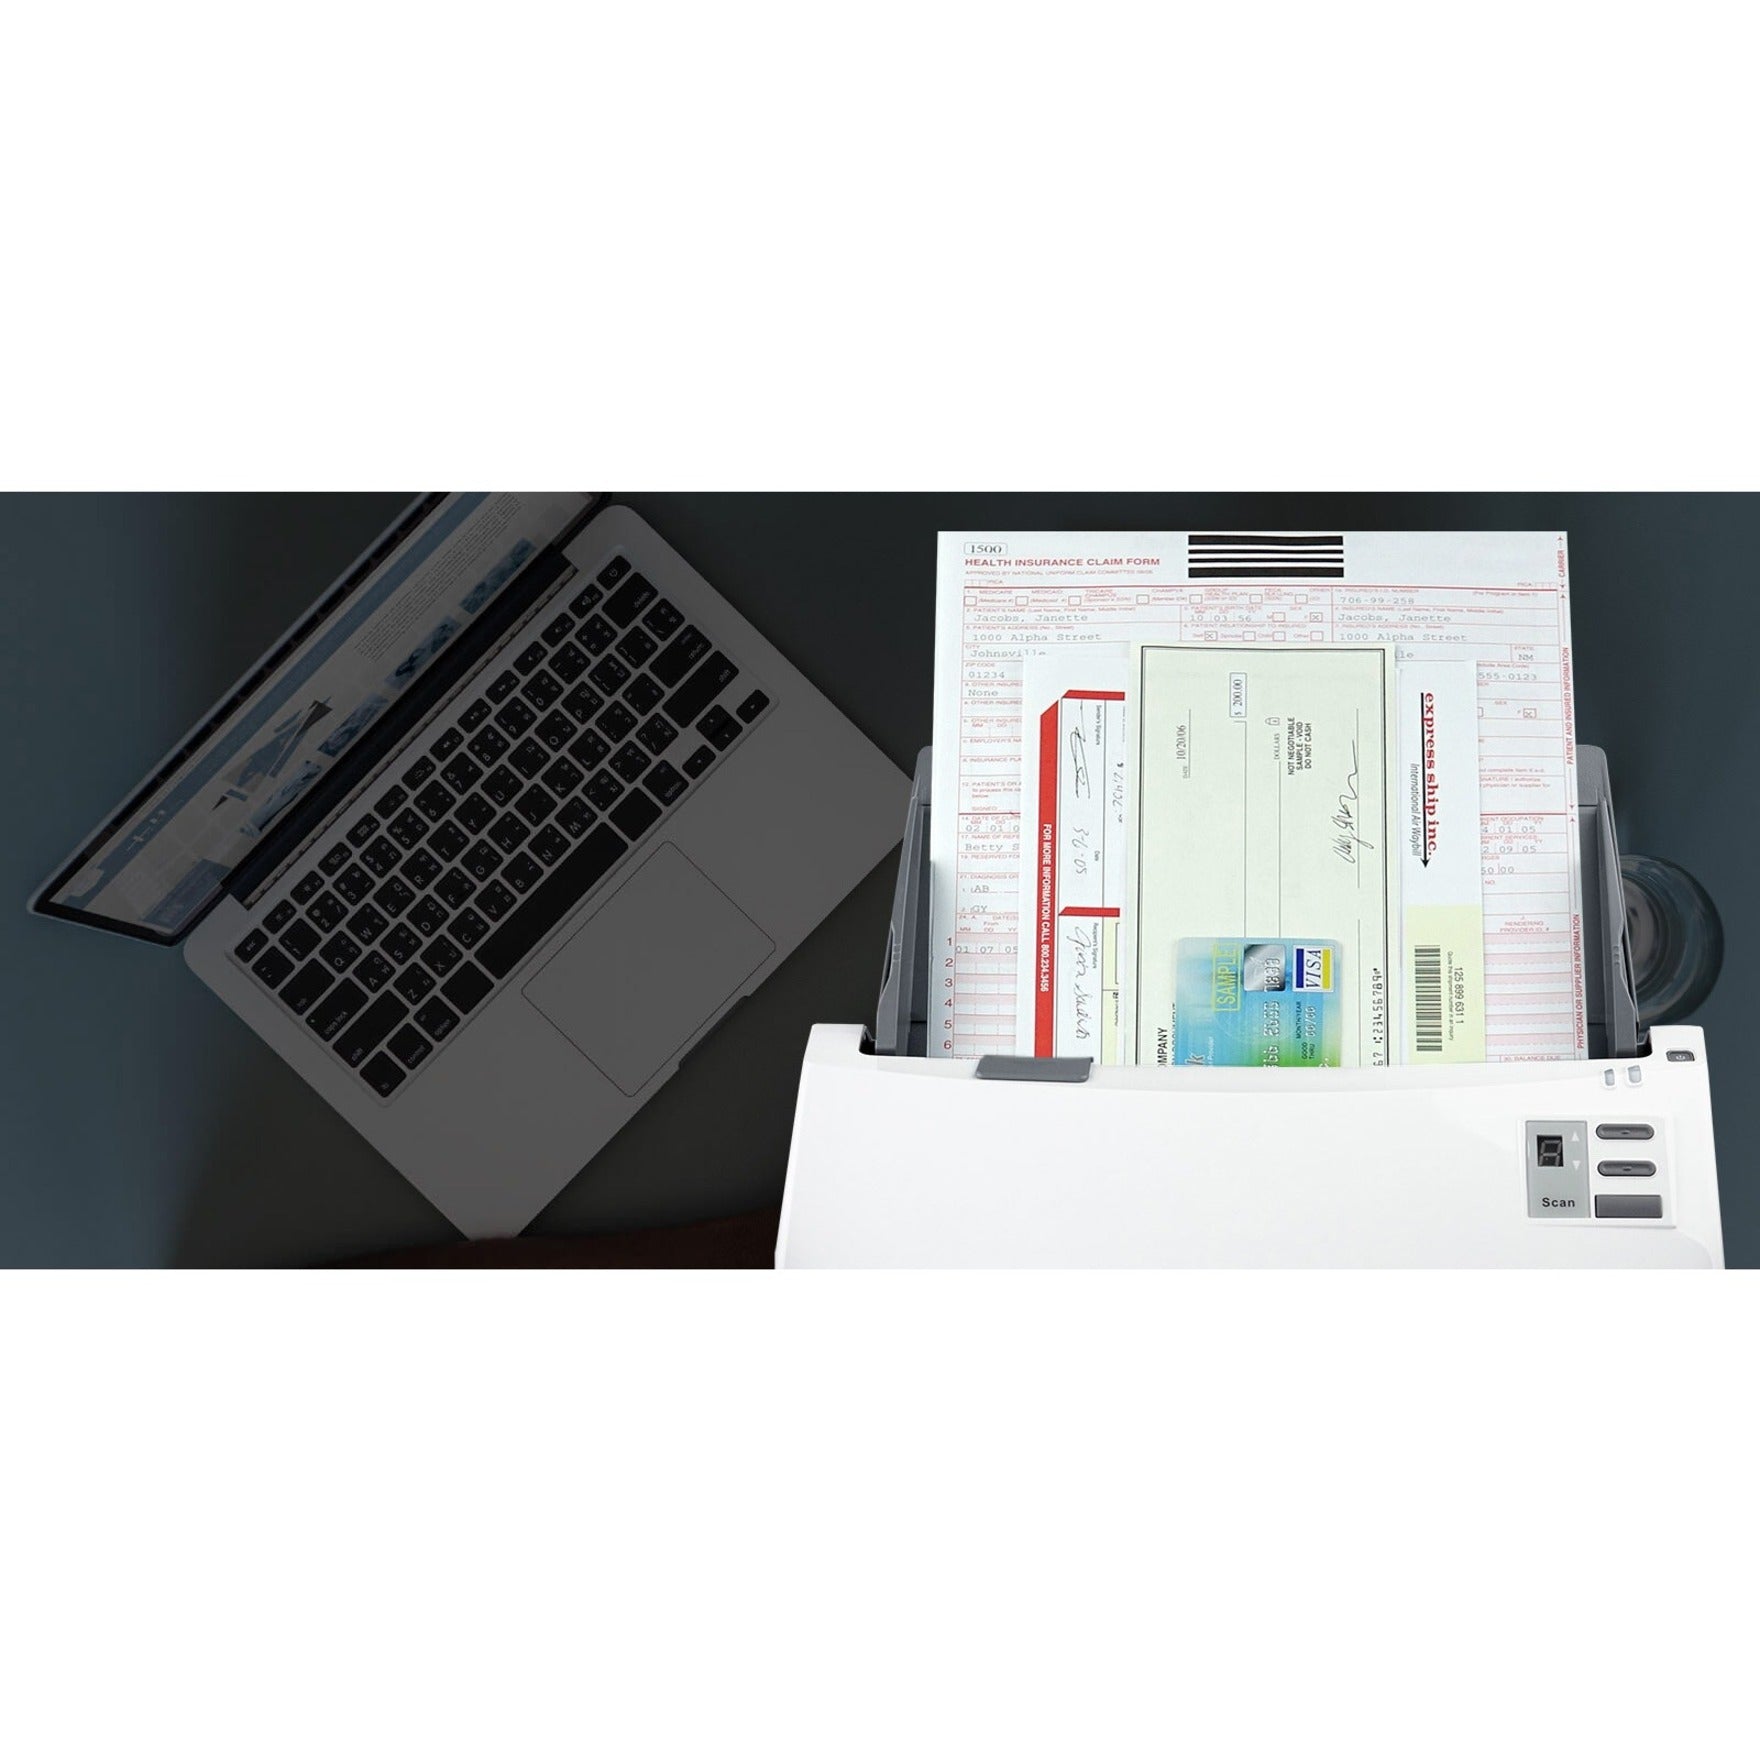 Plustek PS3180U SmartOffice ADF Scanner - Duplex Scanning